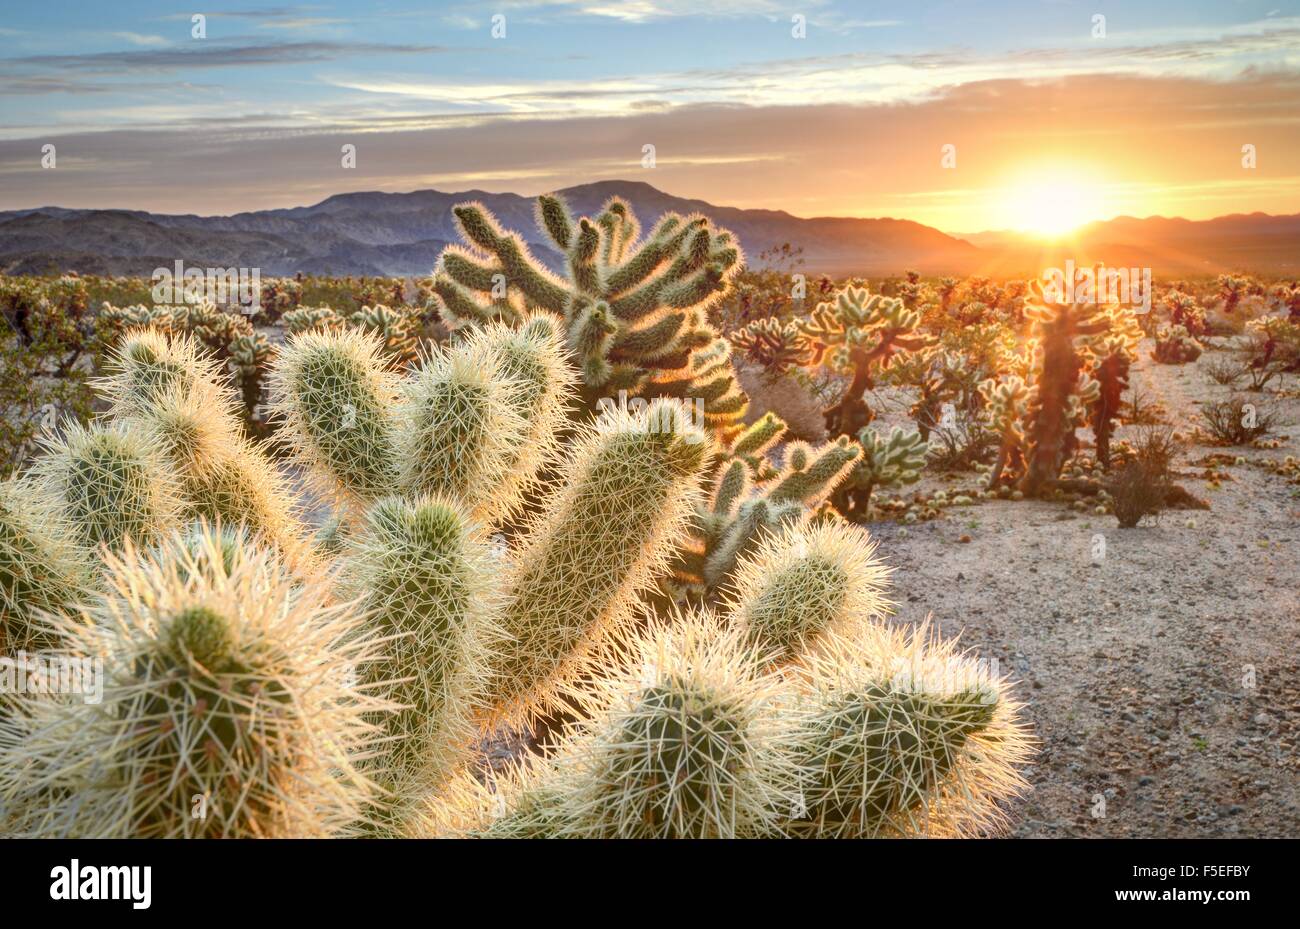 Teddy bear cholla cactus in Joshua tree national park at sunset, California USA Stock Photo